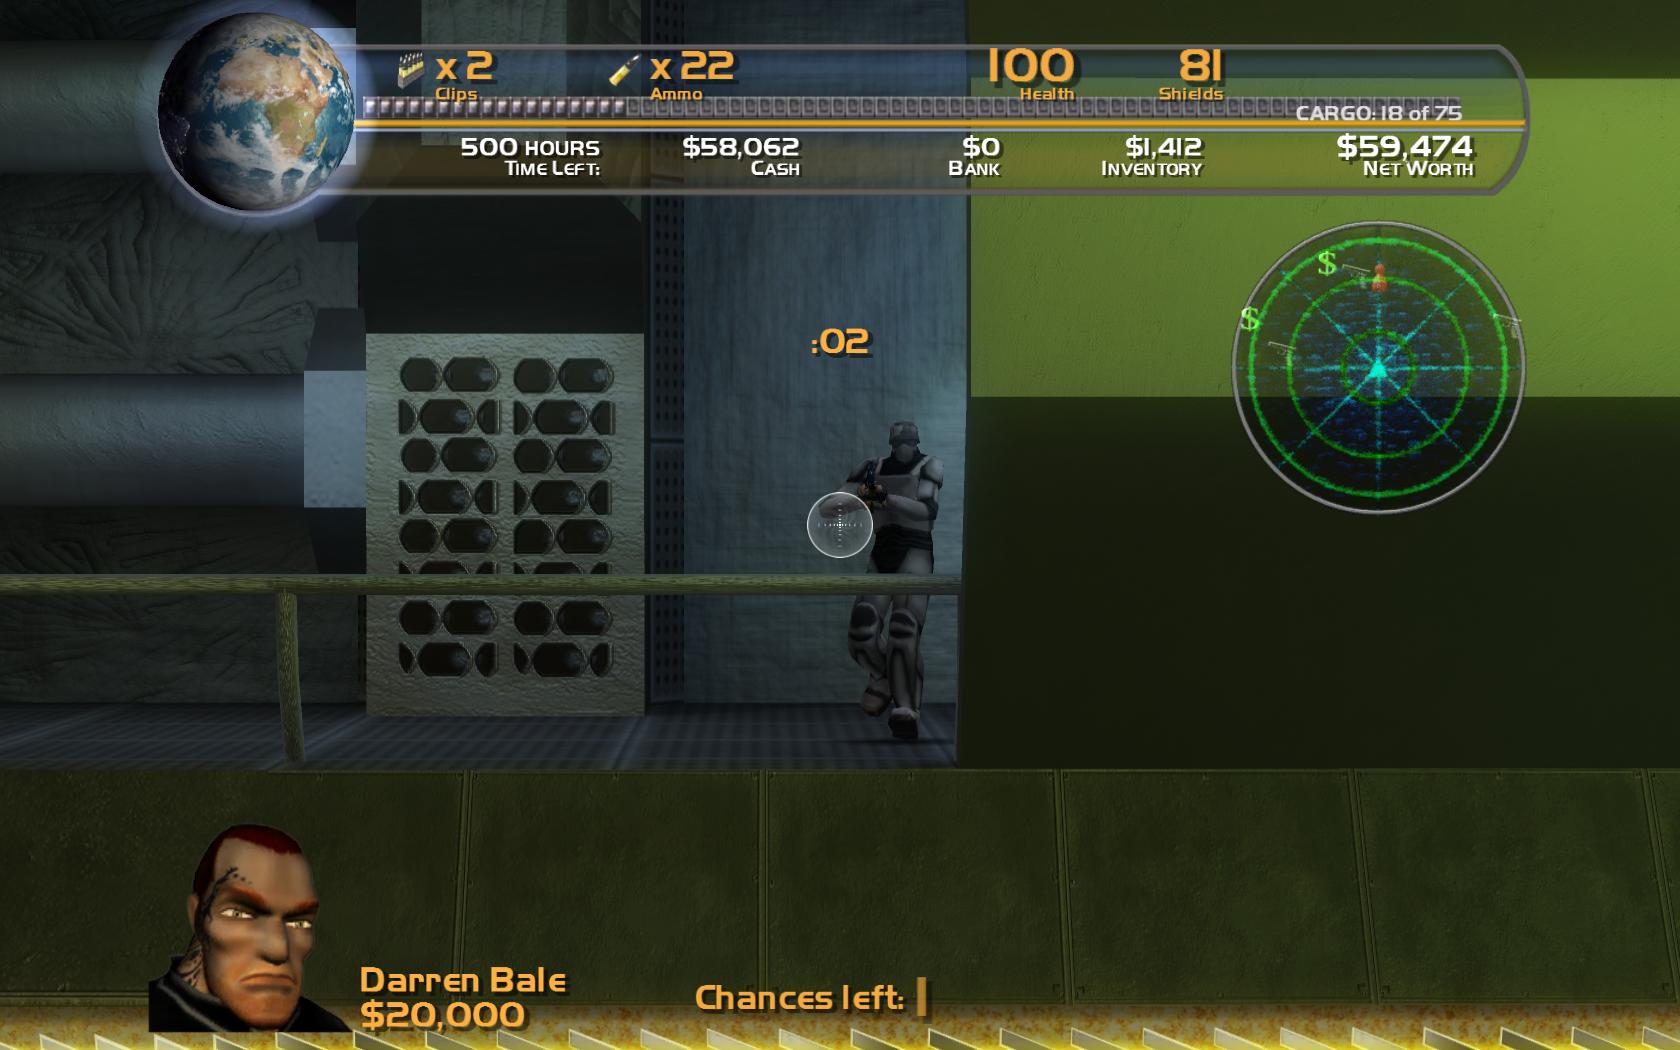 Space Trader: Merchant Marine screenshot